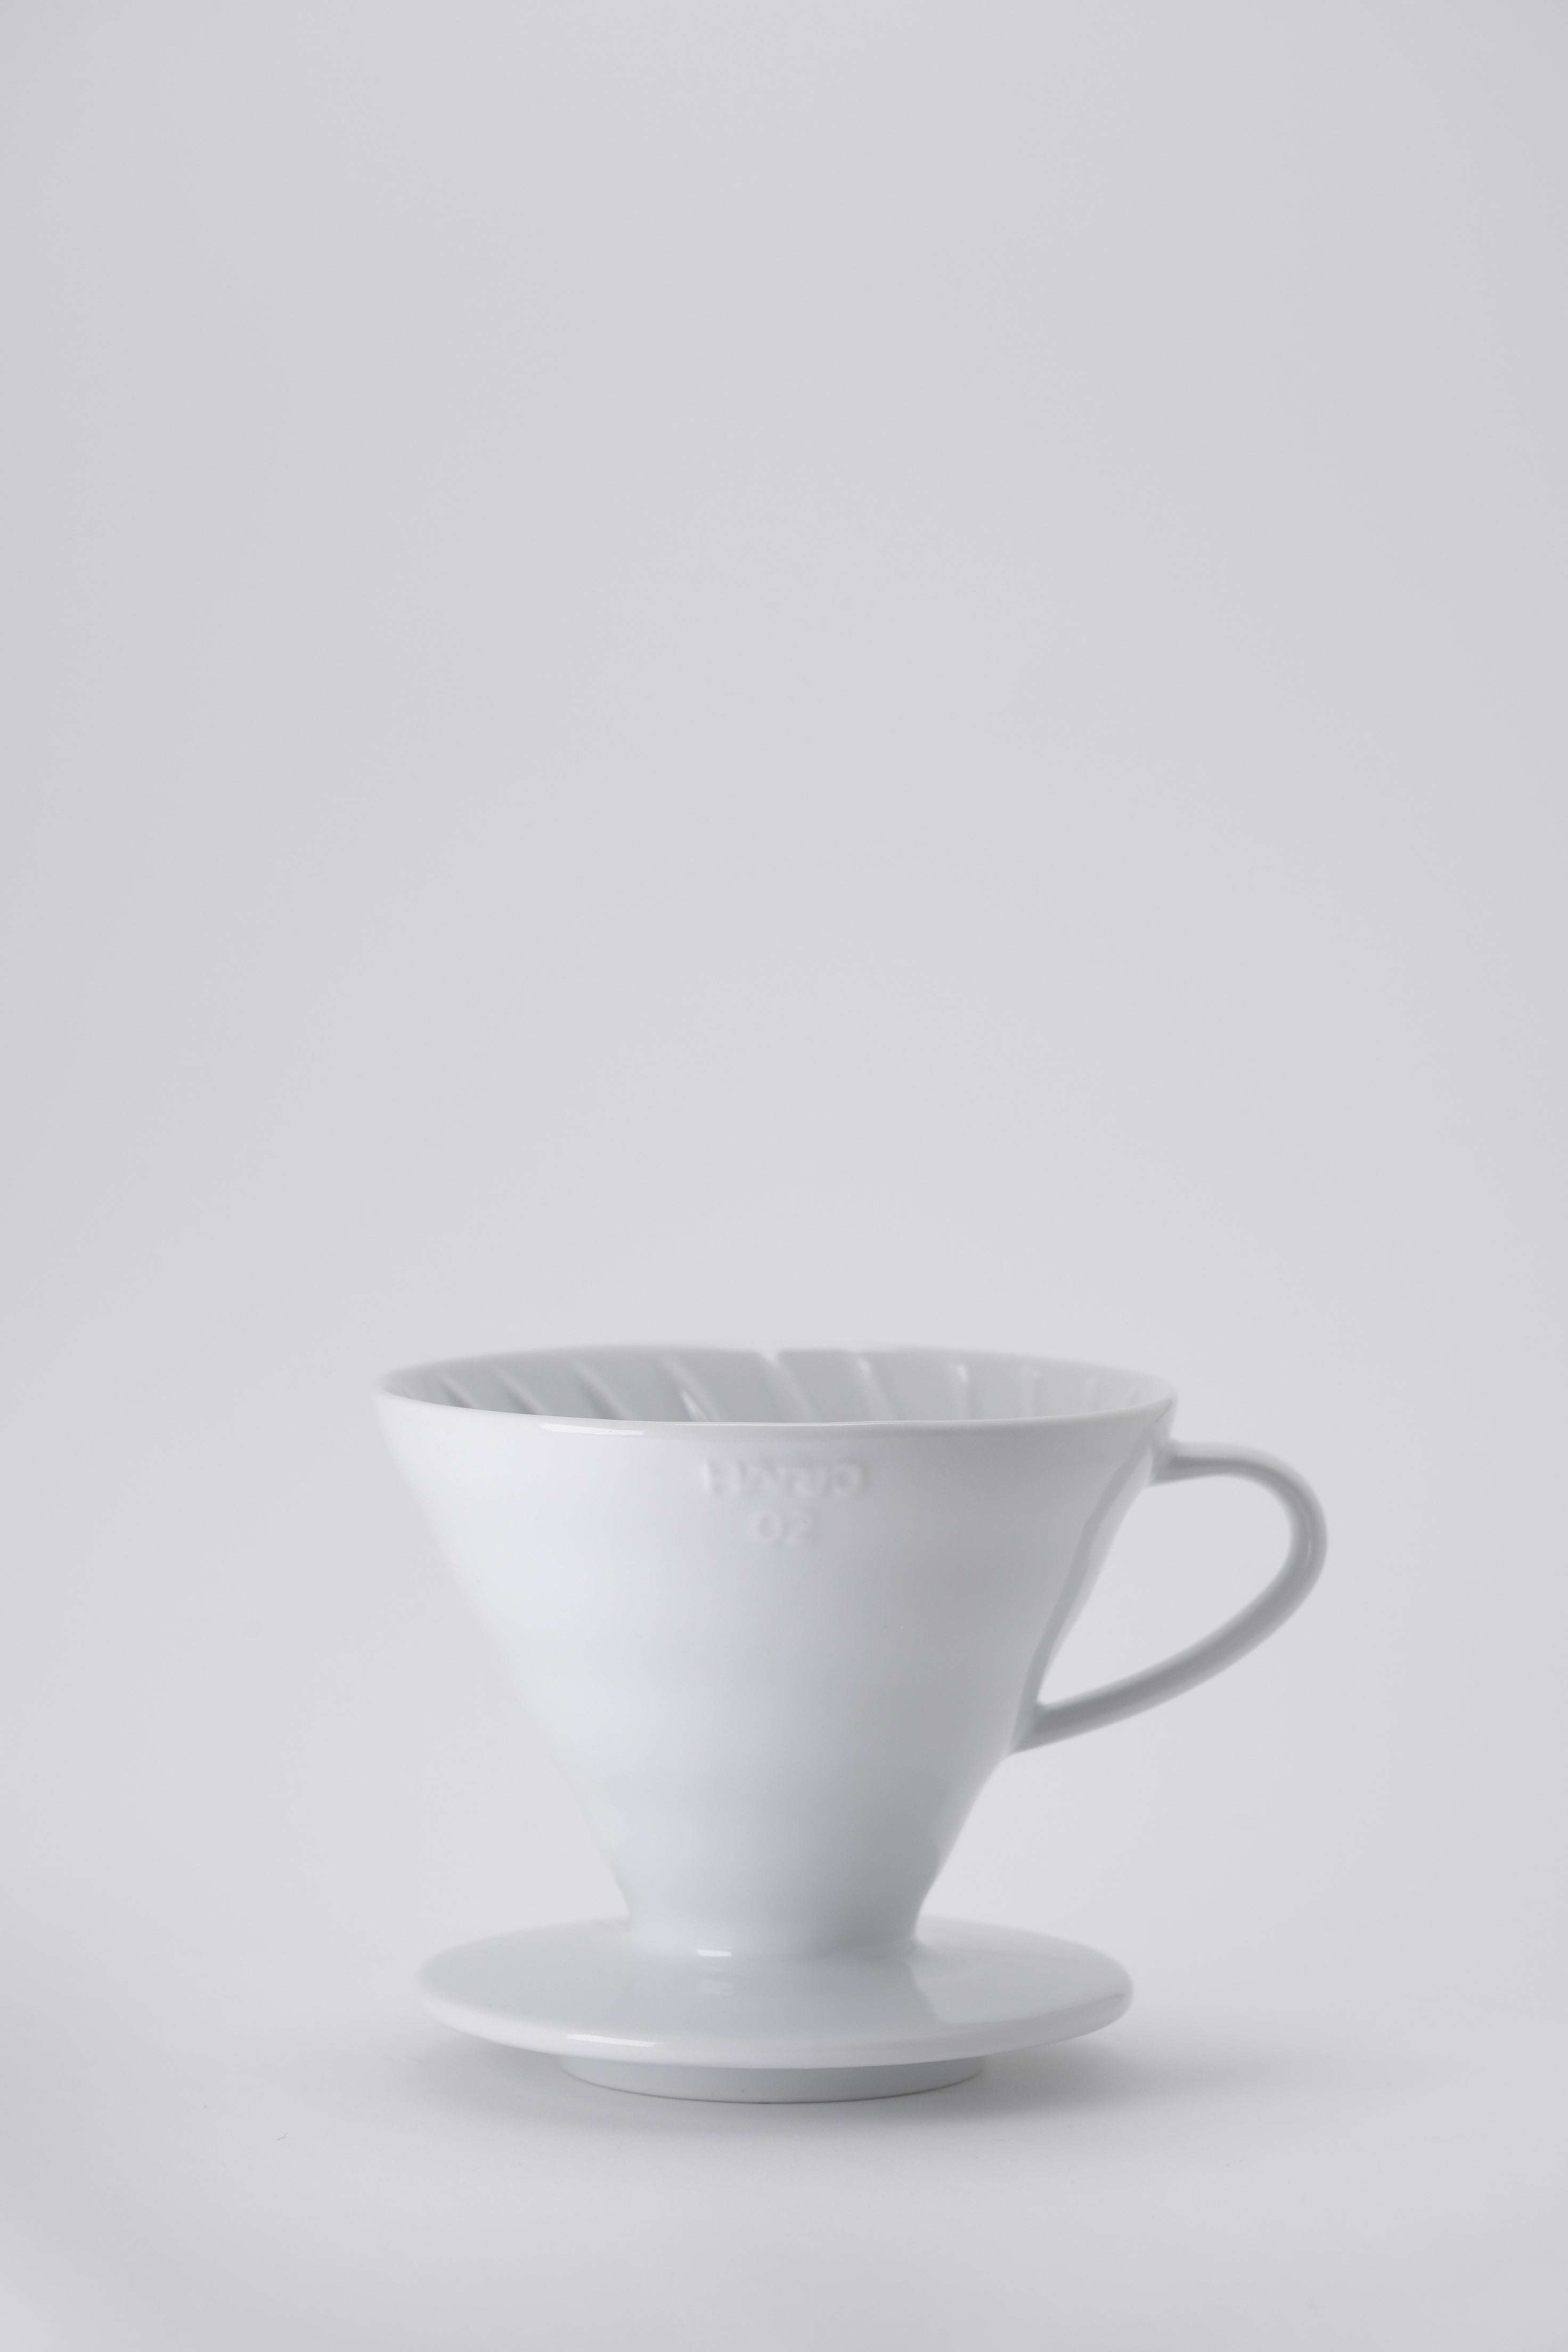 V60 ceramic dripper 02 white-Hario-[interior]-[design]-KIOSK48TH